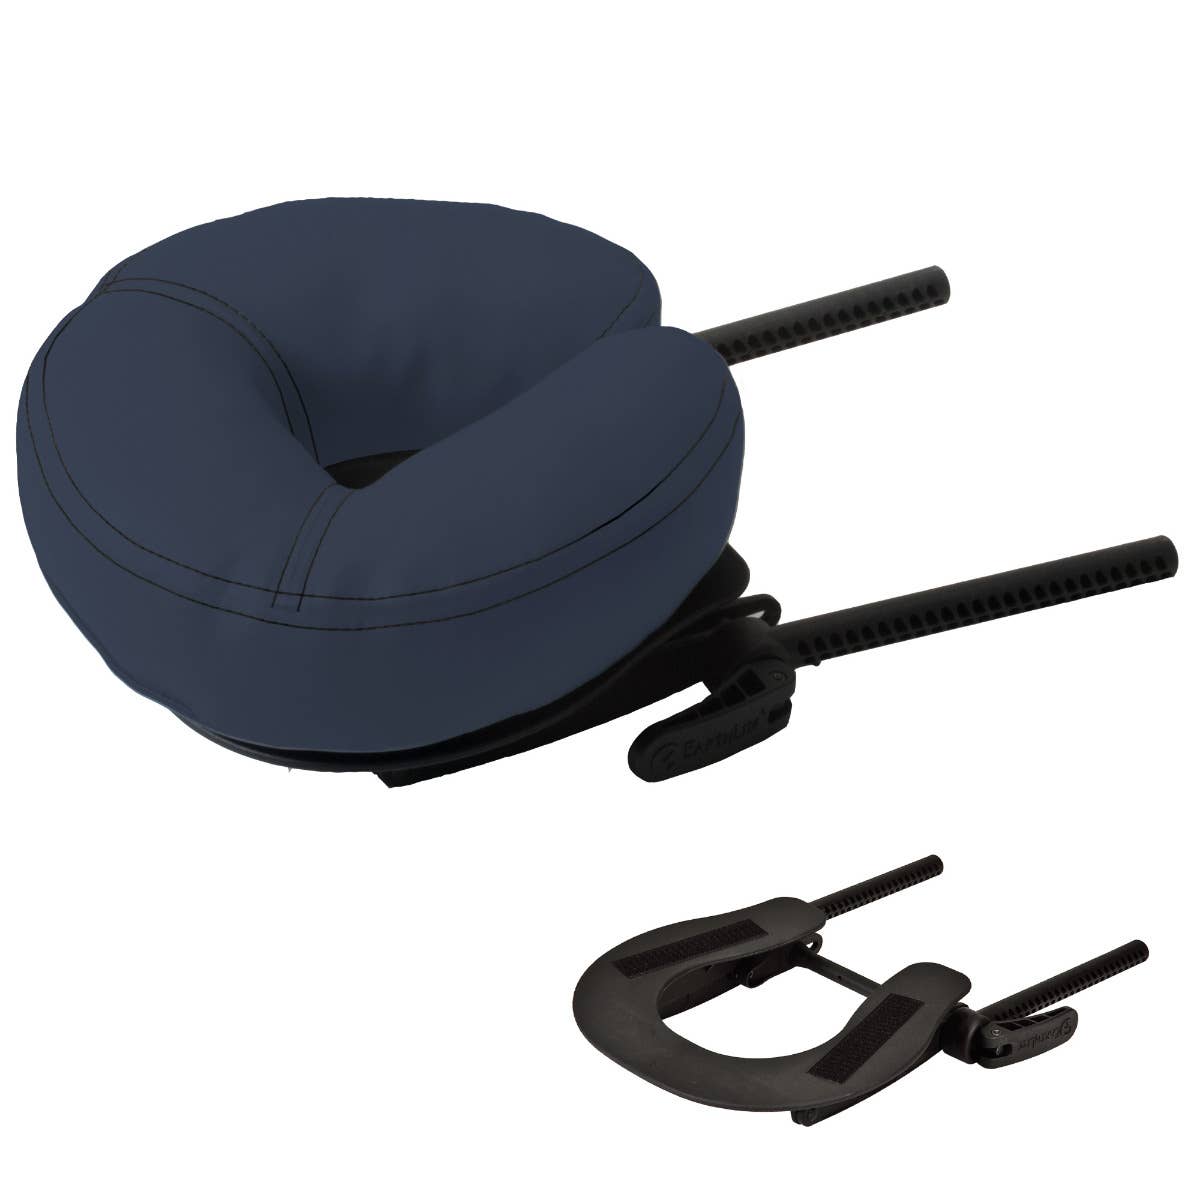 Earthlite Deluxe Adjustable Headrest - Platform and Cushion (Mystic Blue)